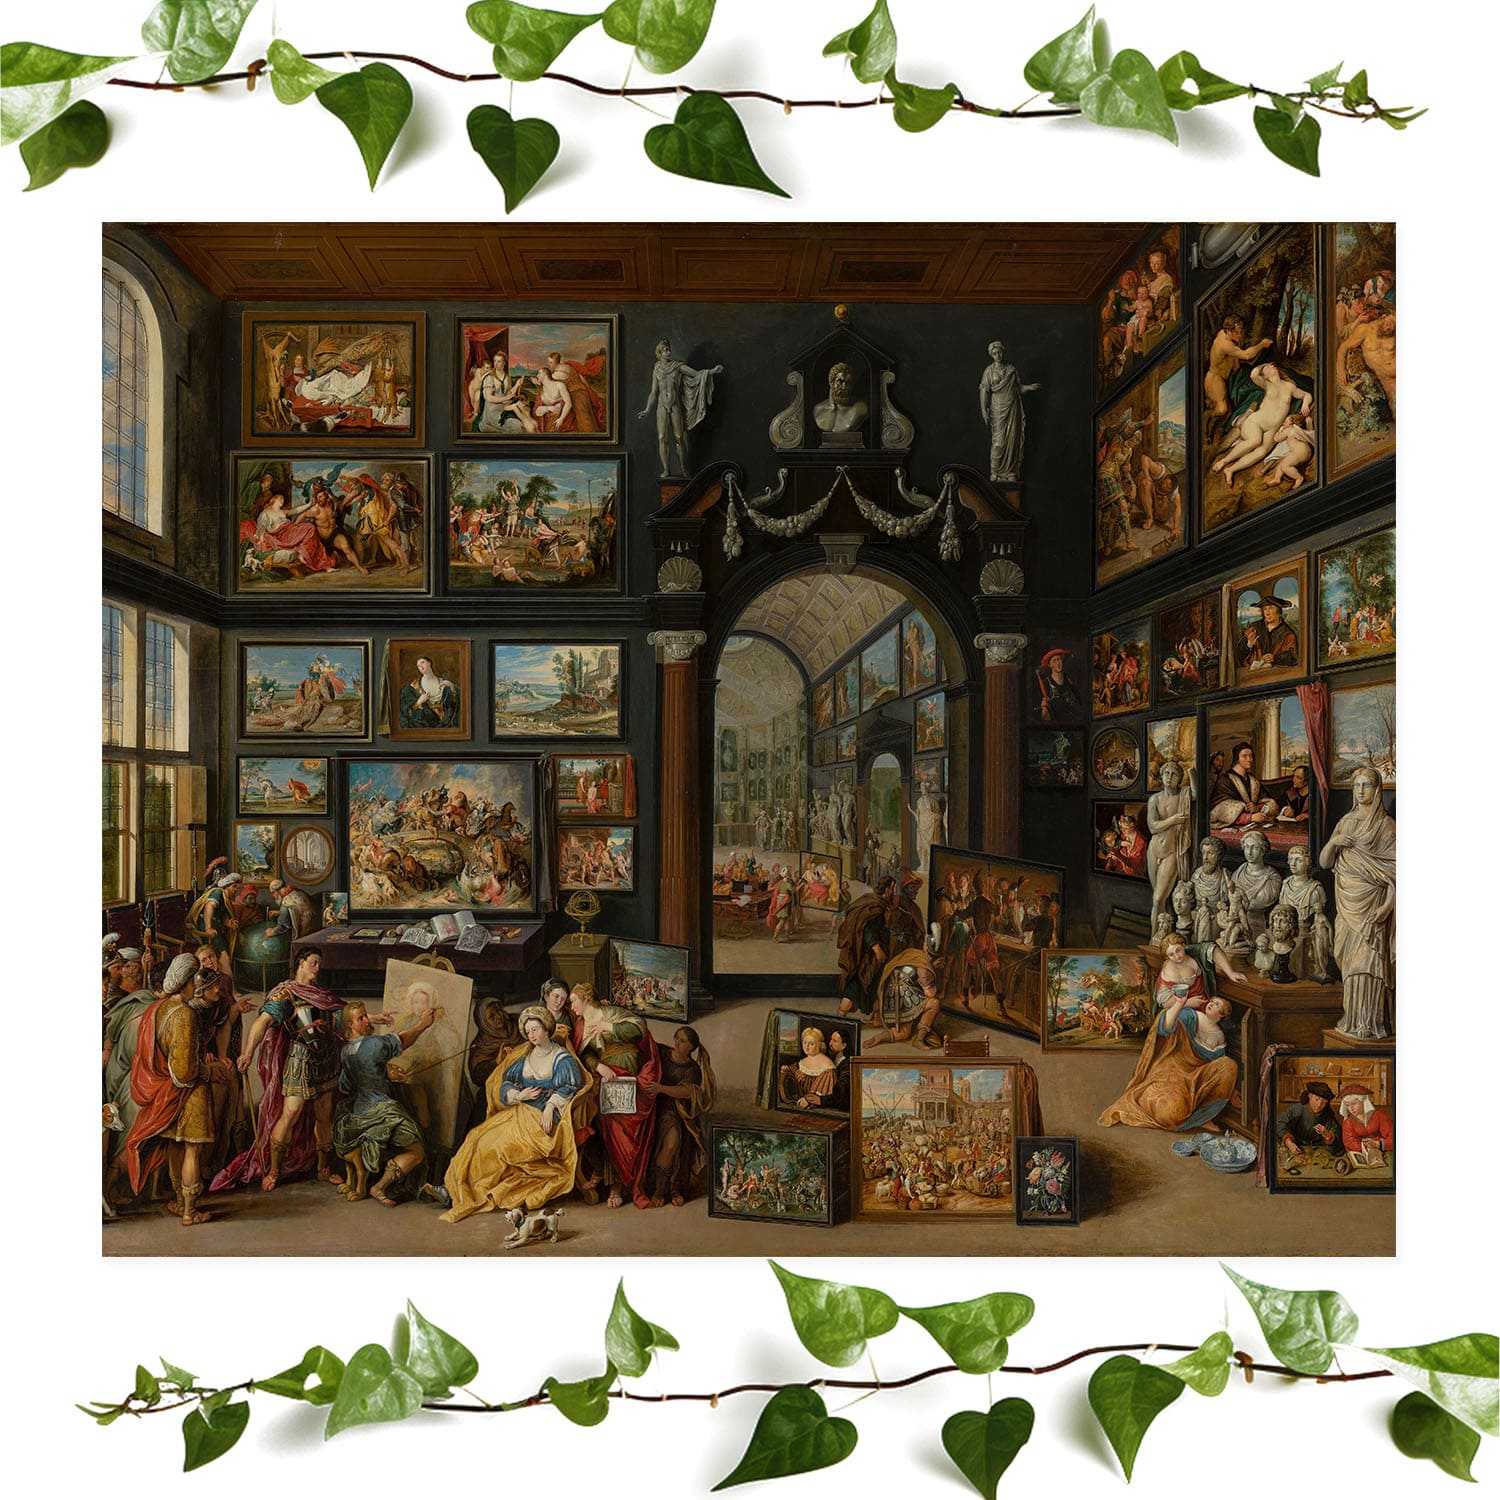 Renaissance art prints featuring a academia and art, vintage wall art room decor